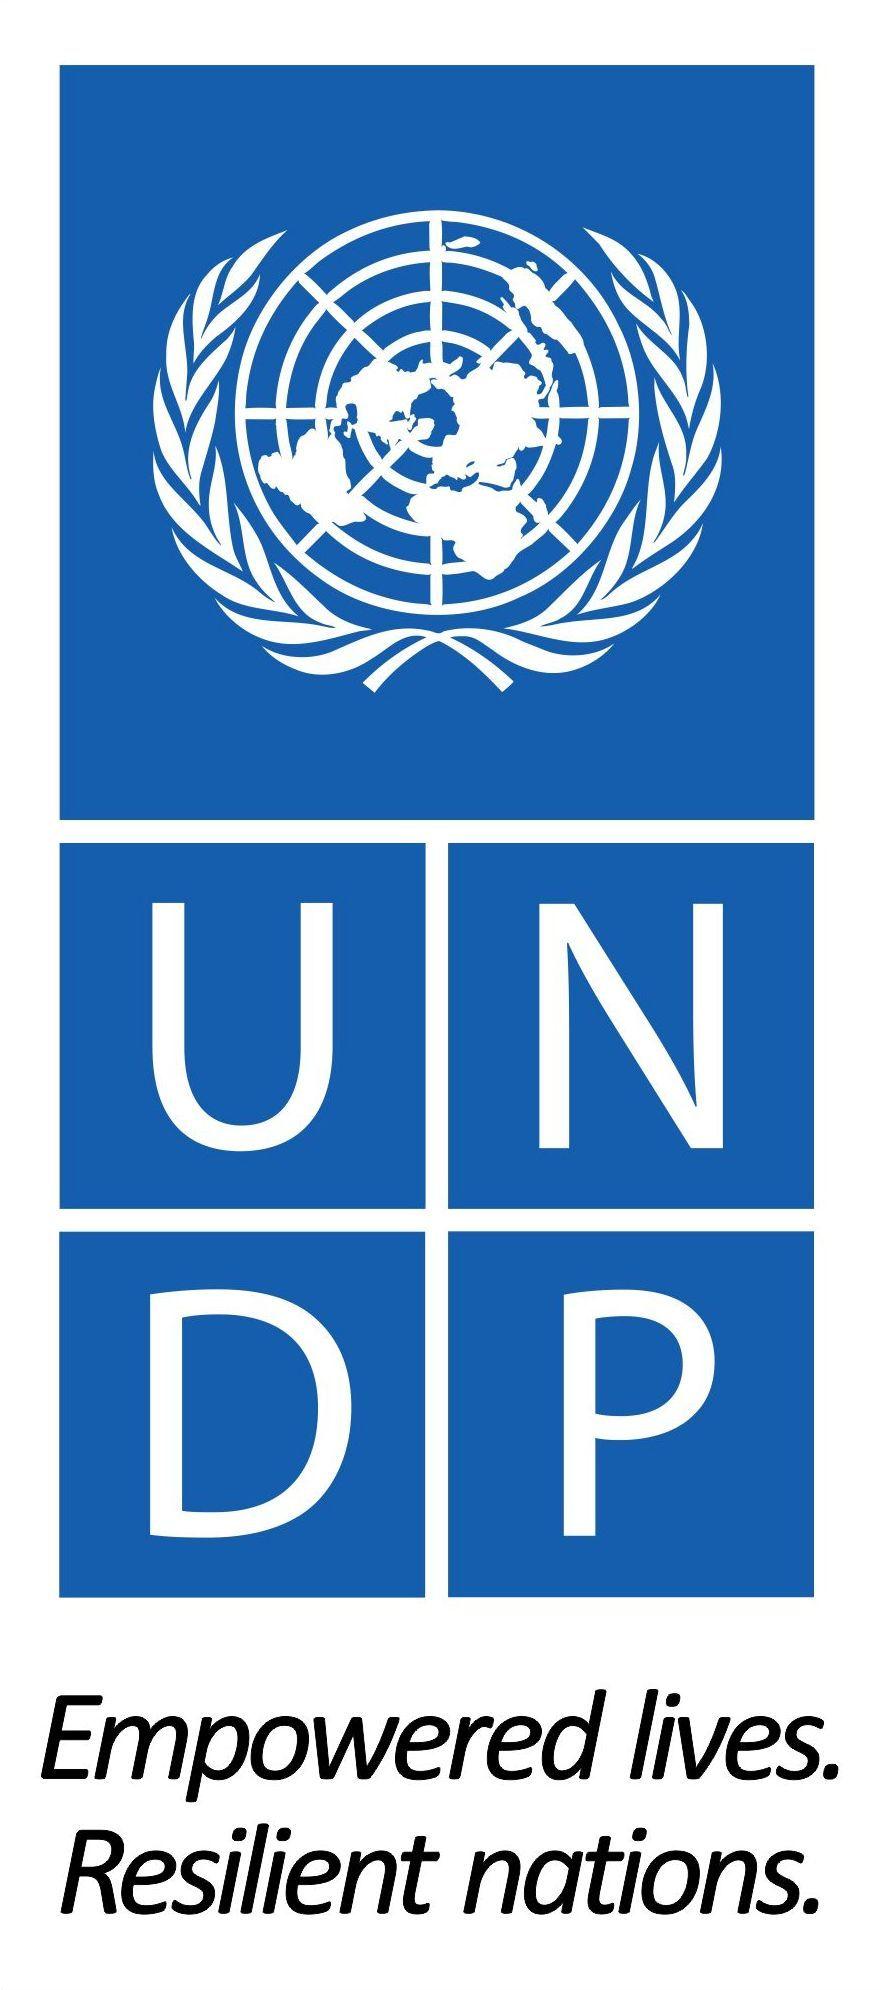 UNDP Logo - UNDP logos and branding guidelines | UNDP in Bosnia and Herzegovina